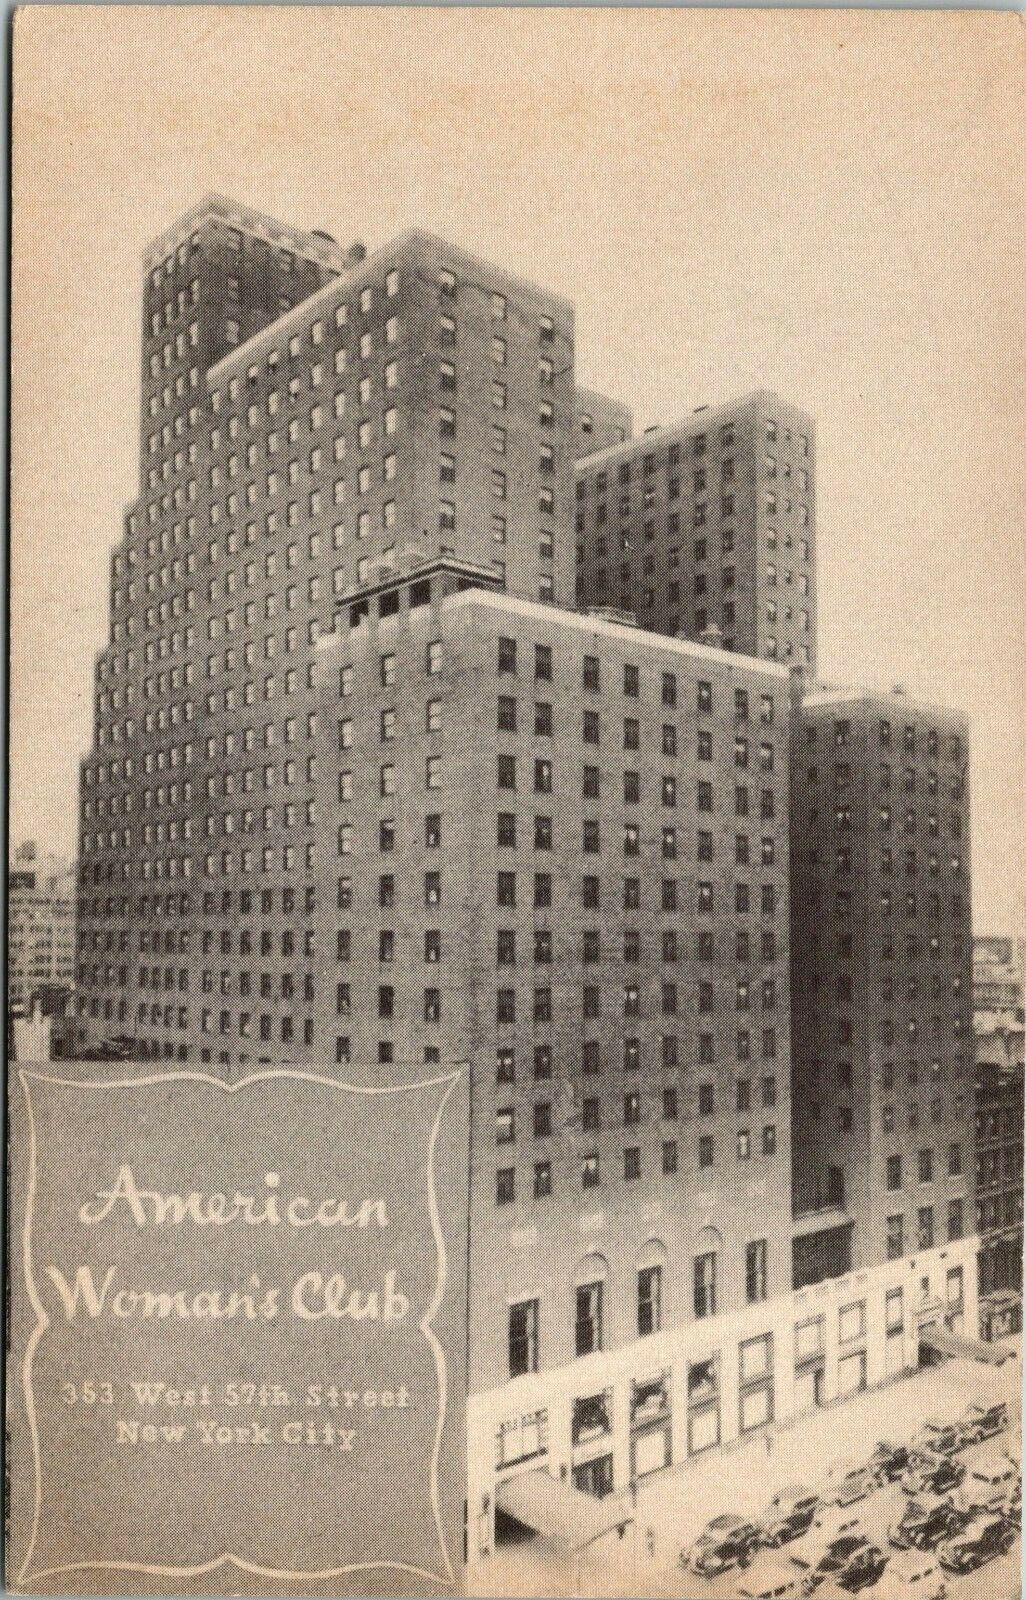  New York City American Woman\'s Club 353 West 57th Street Vintage Postcard 